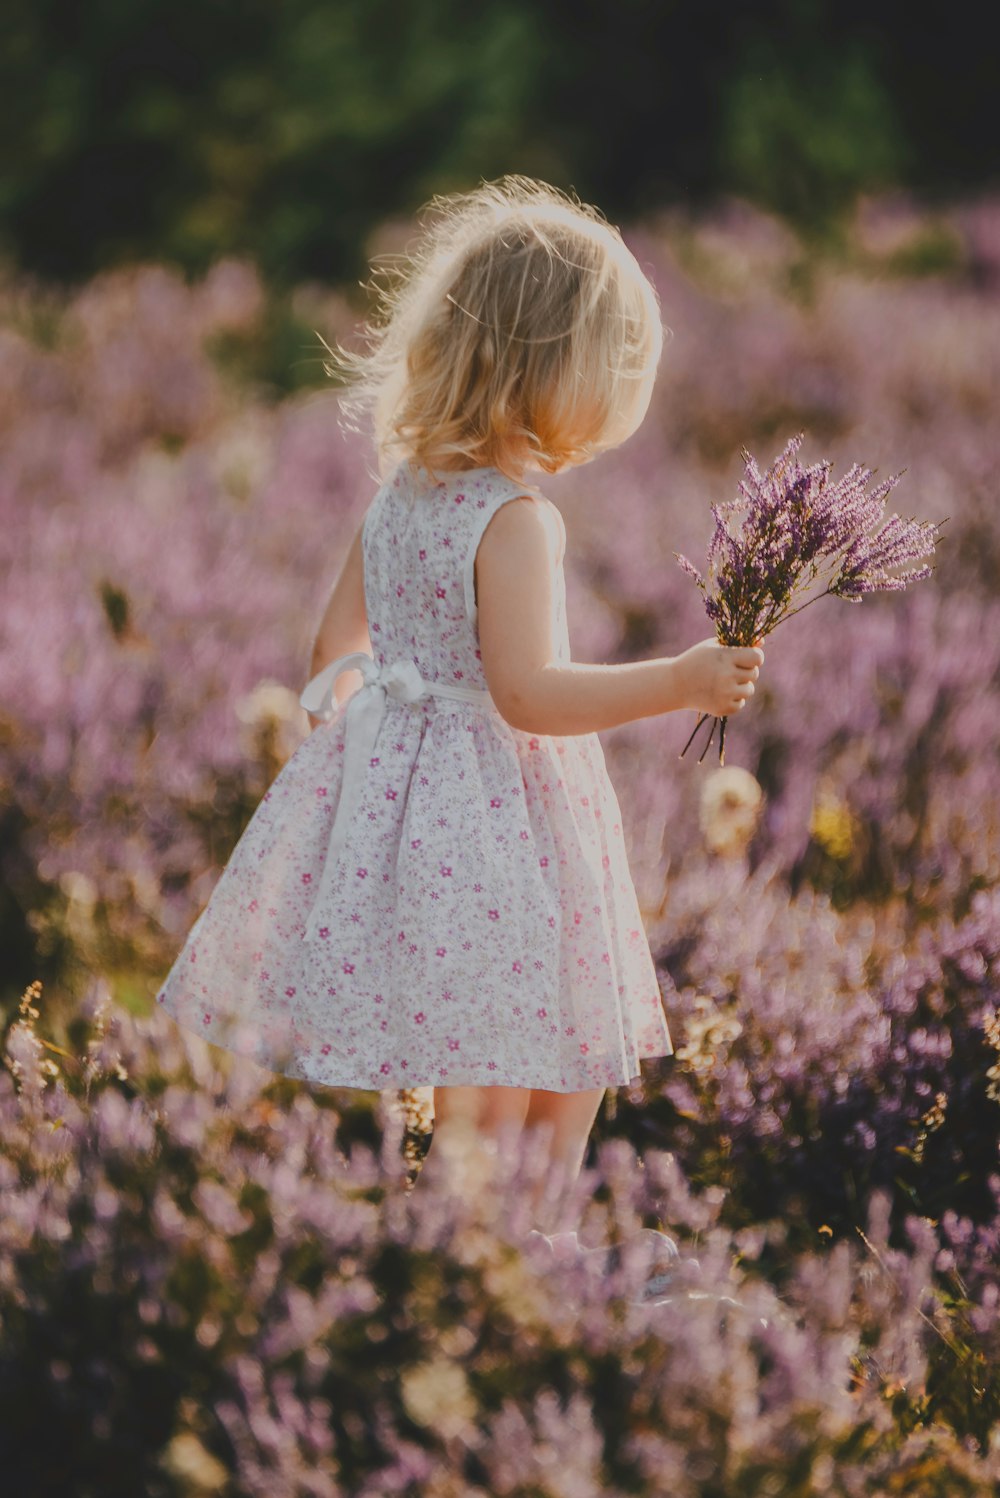 a little girl standing in a field of flowers